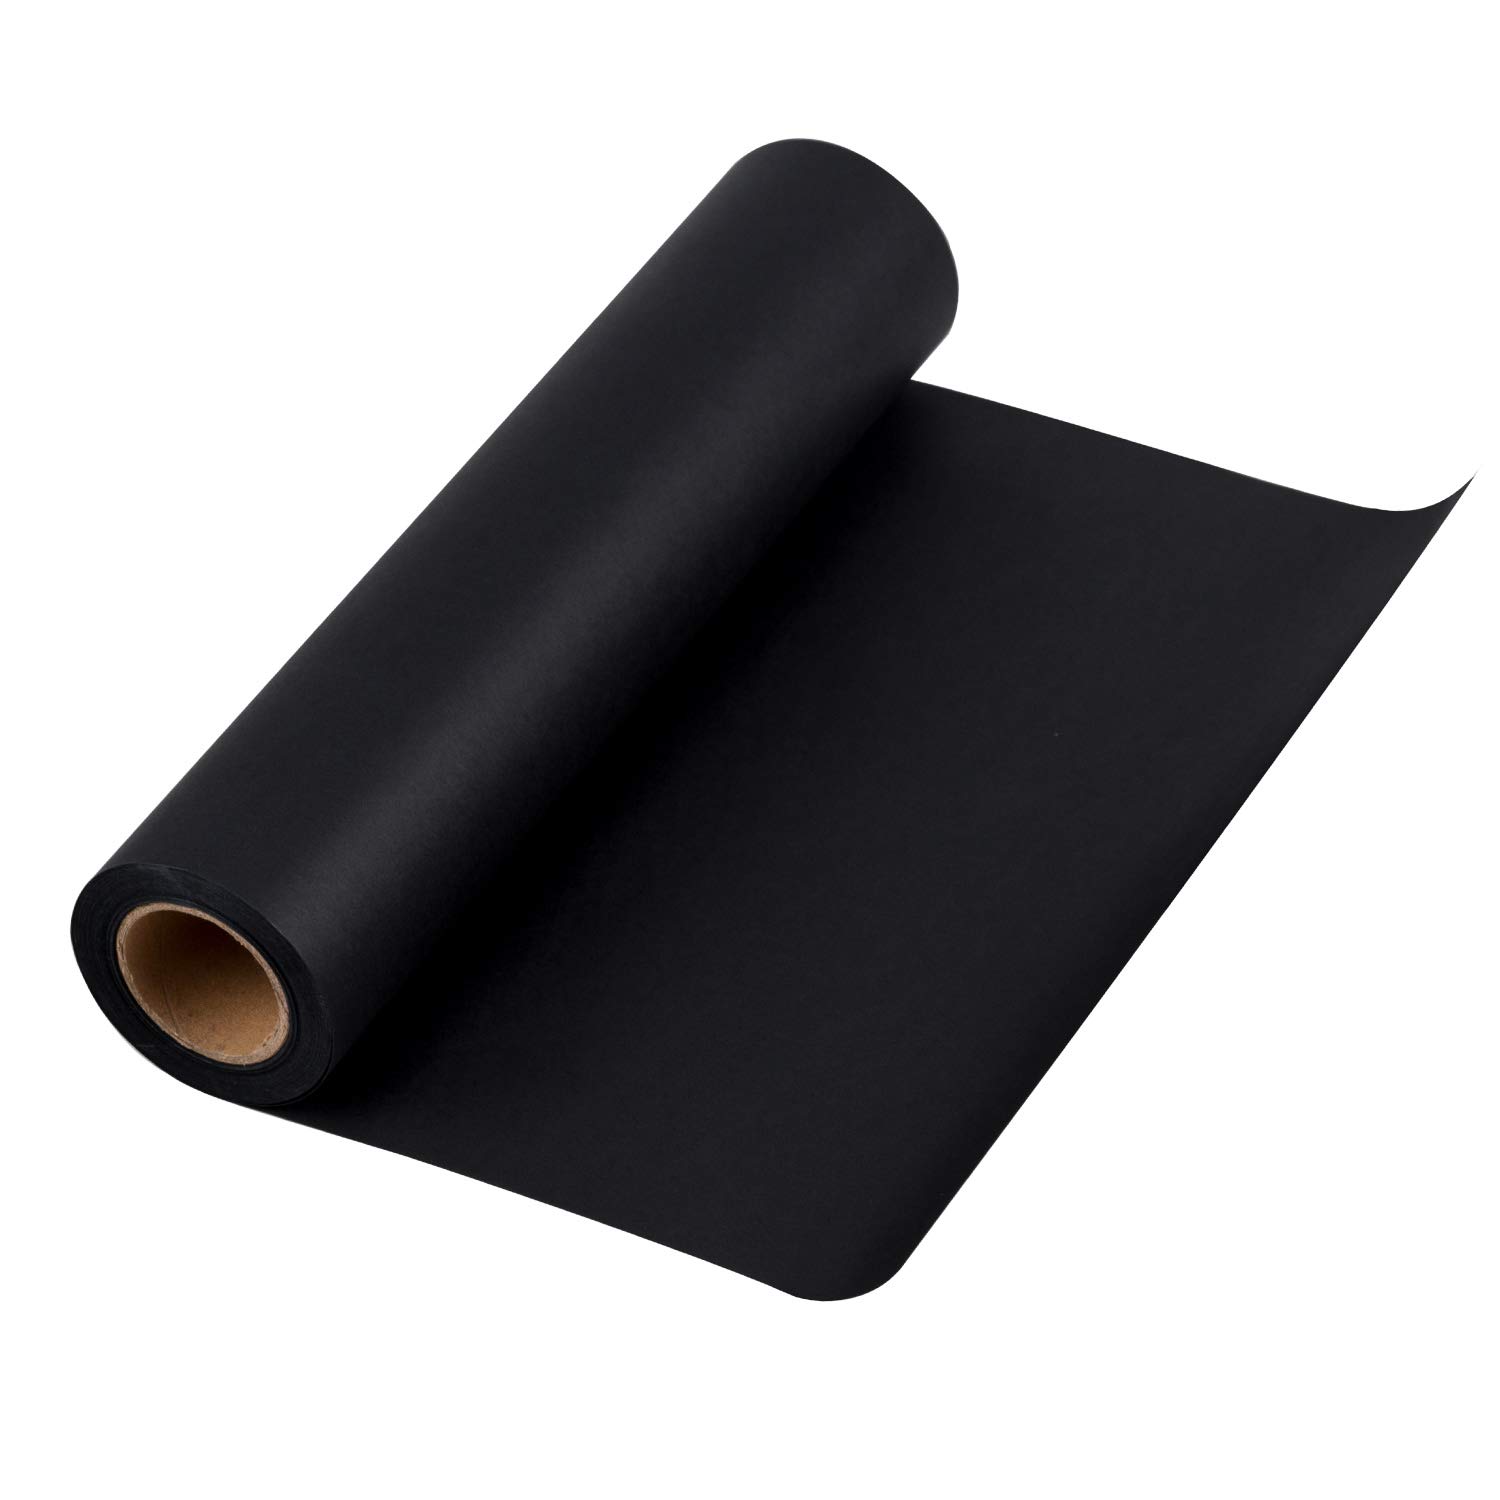 RUSPEPA Black Kraft Paper Roll - 12 inches x 100 feet - Recyclable